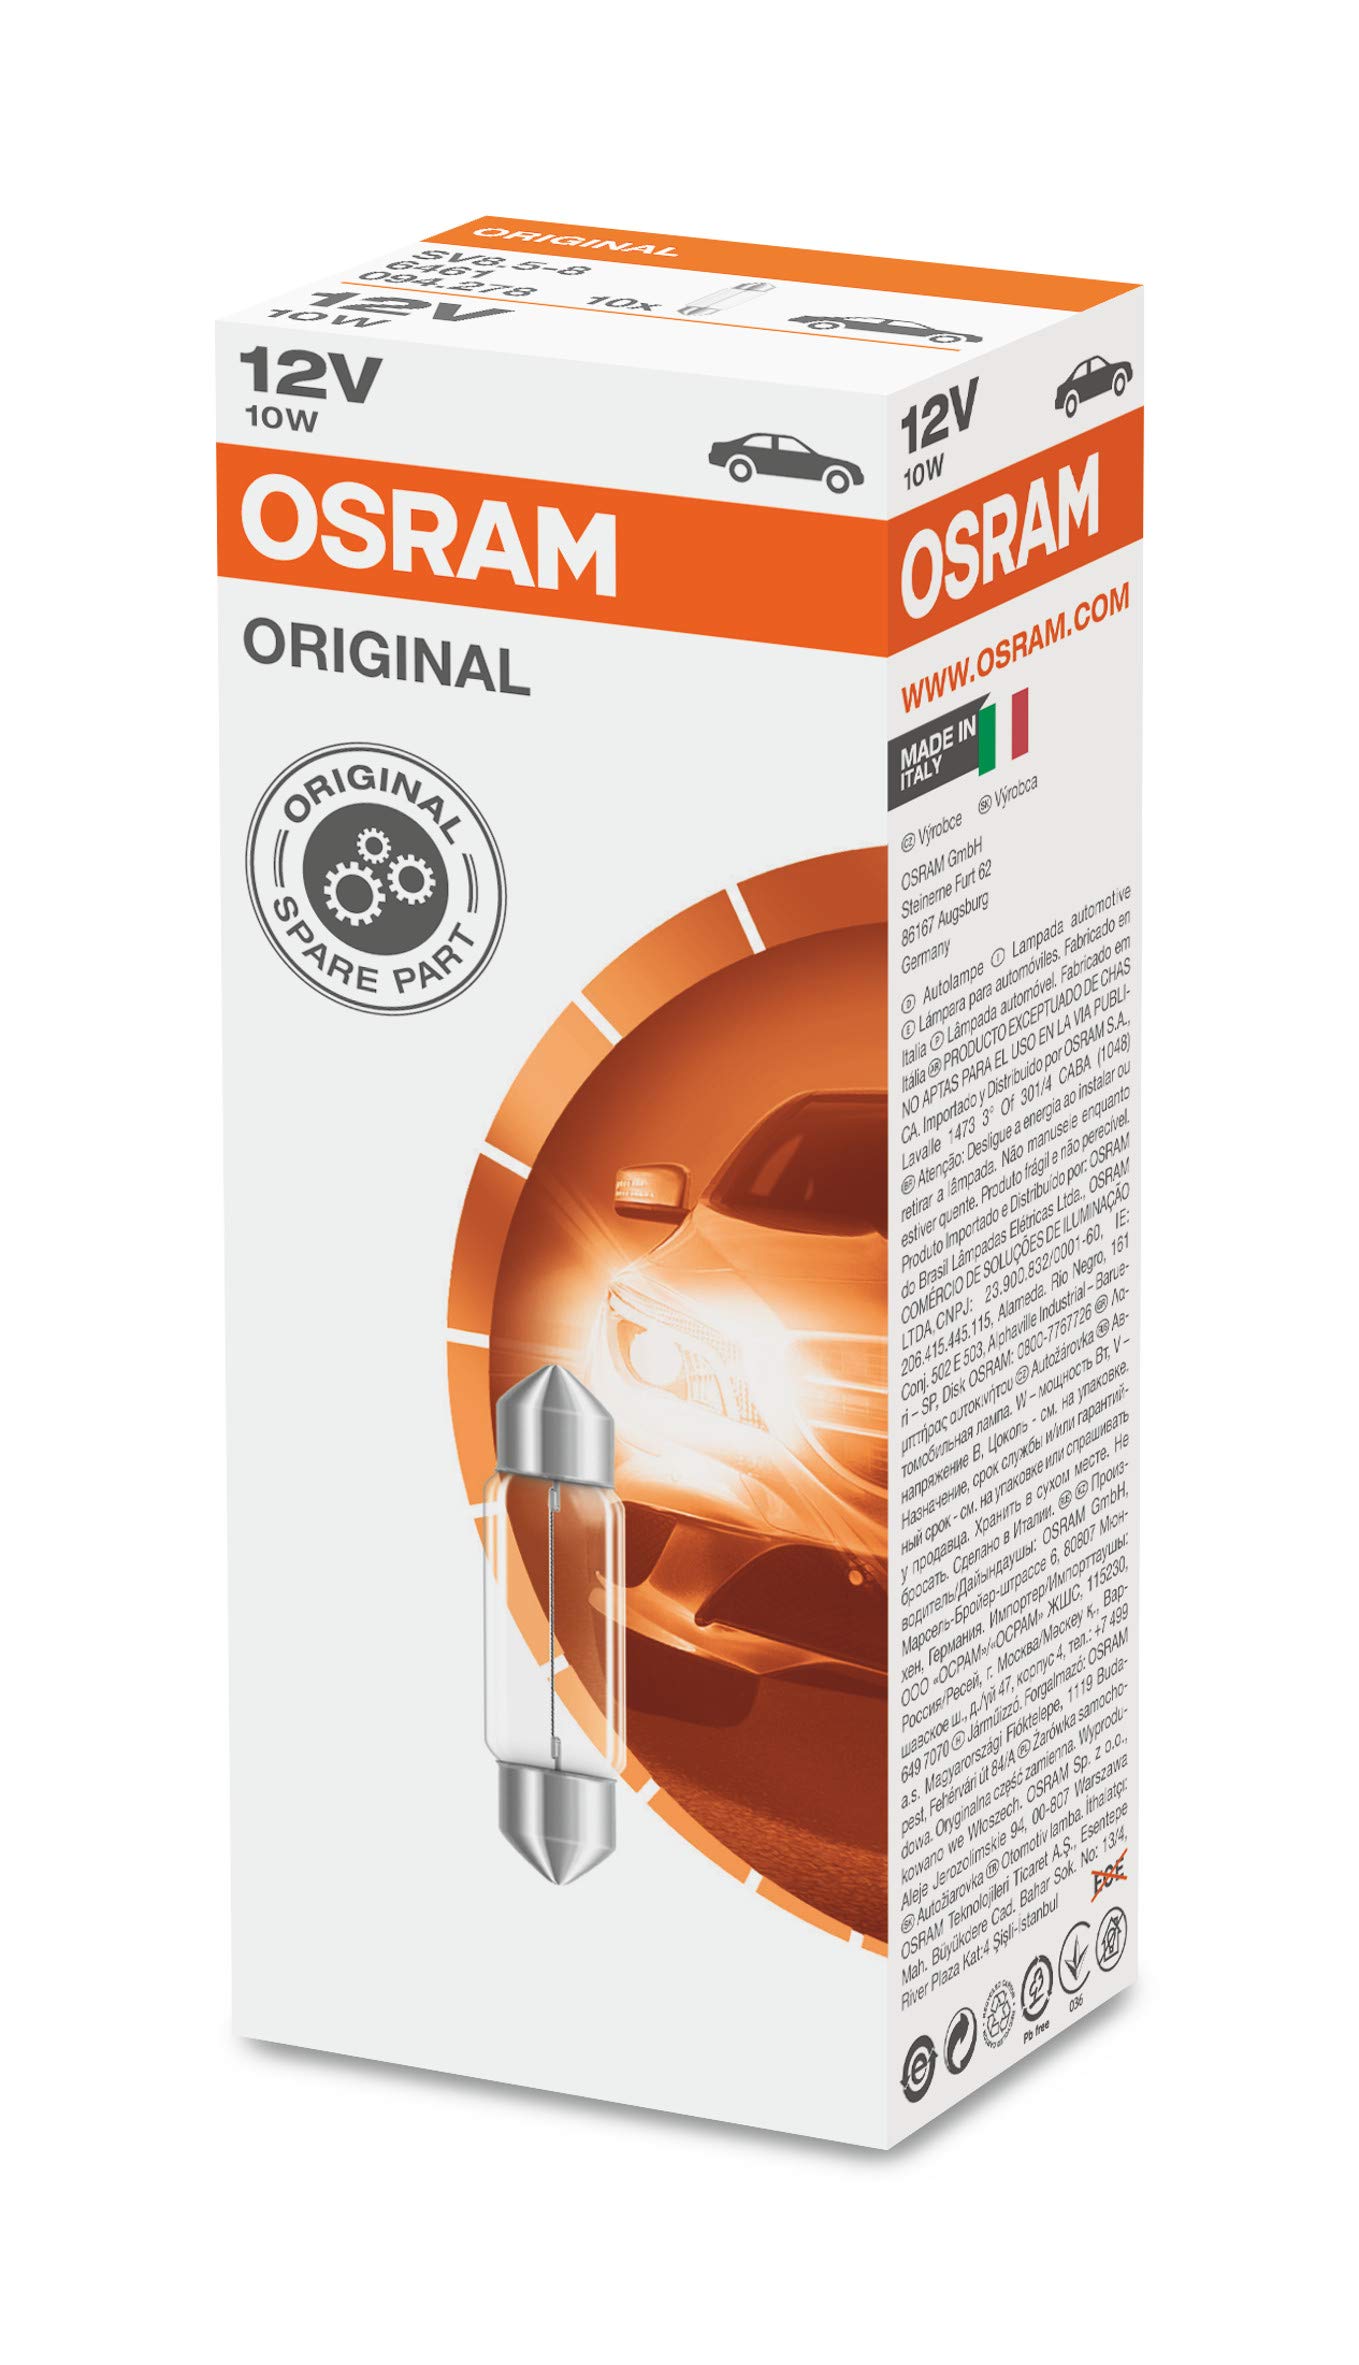 Osram 6461 ORIGINAL Sofittenlampe, Sockel SV8.5-8, 12V, 10W, 1 Lampe, Anzahl 10 von Osram